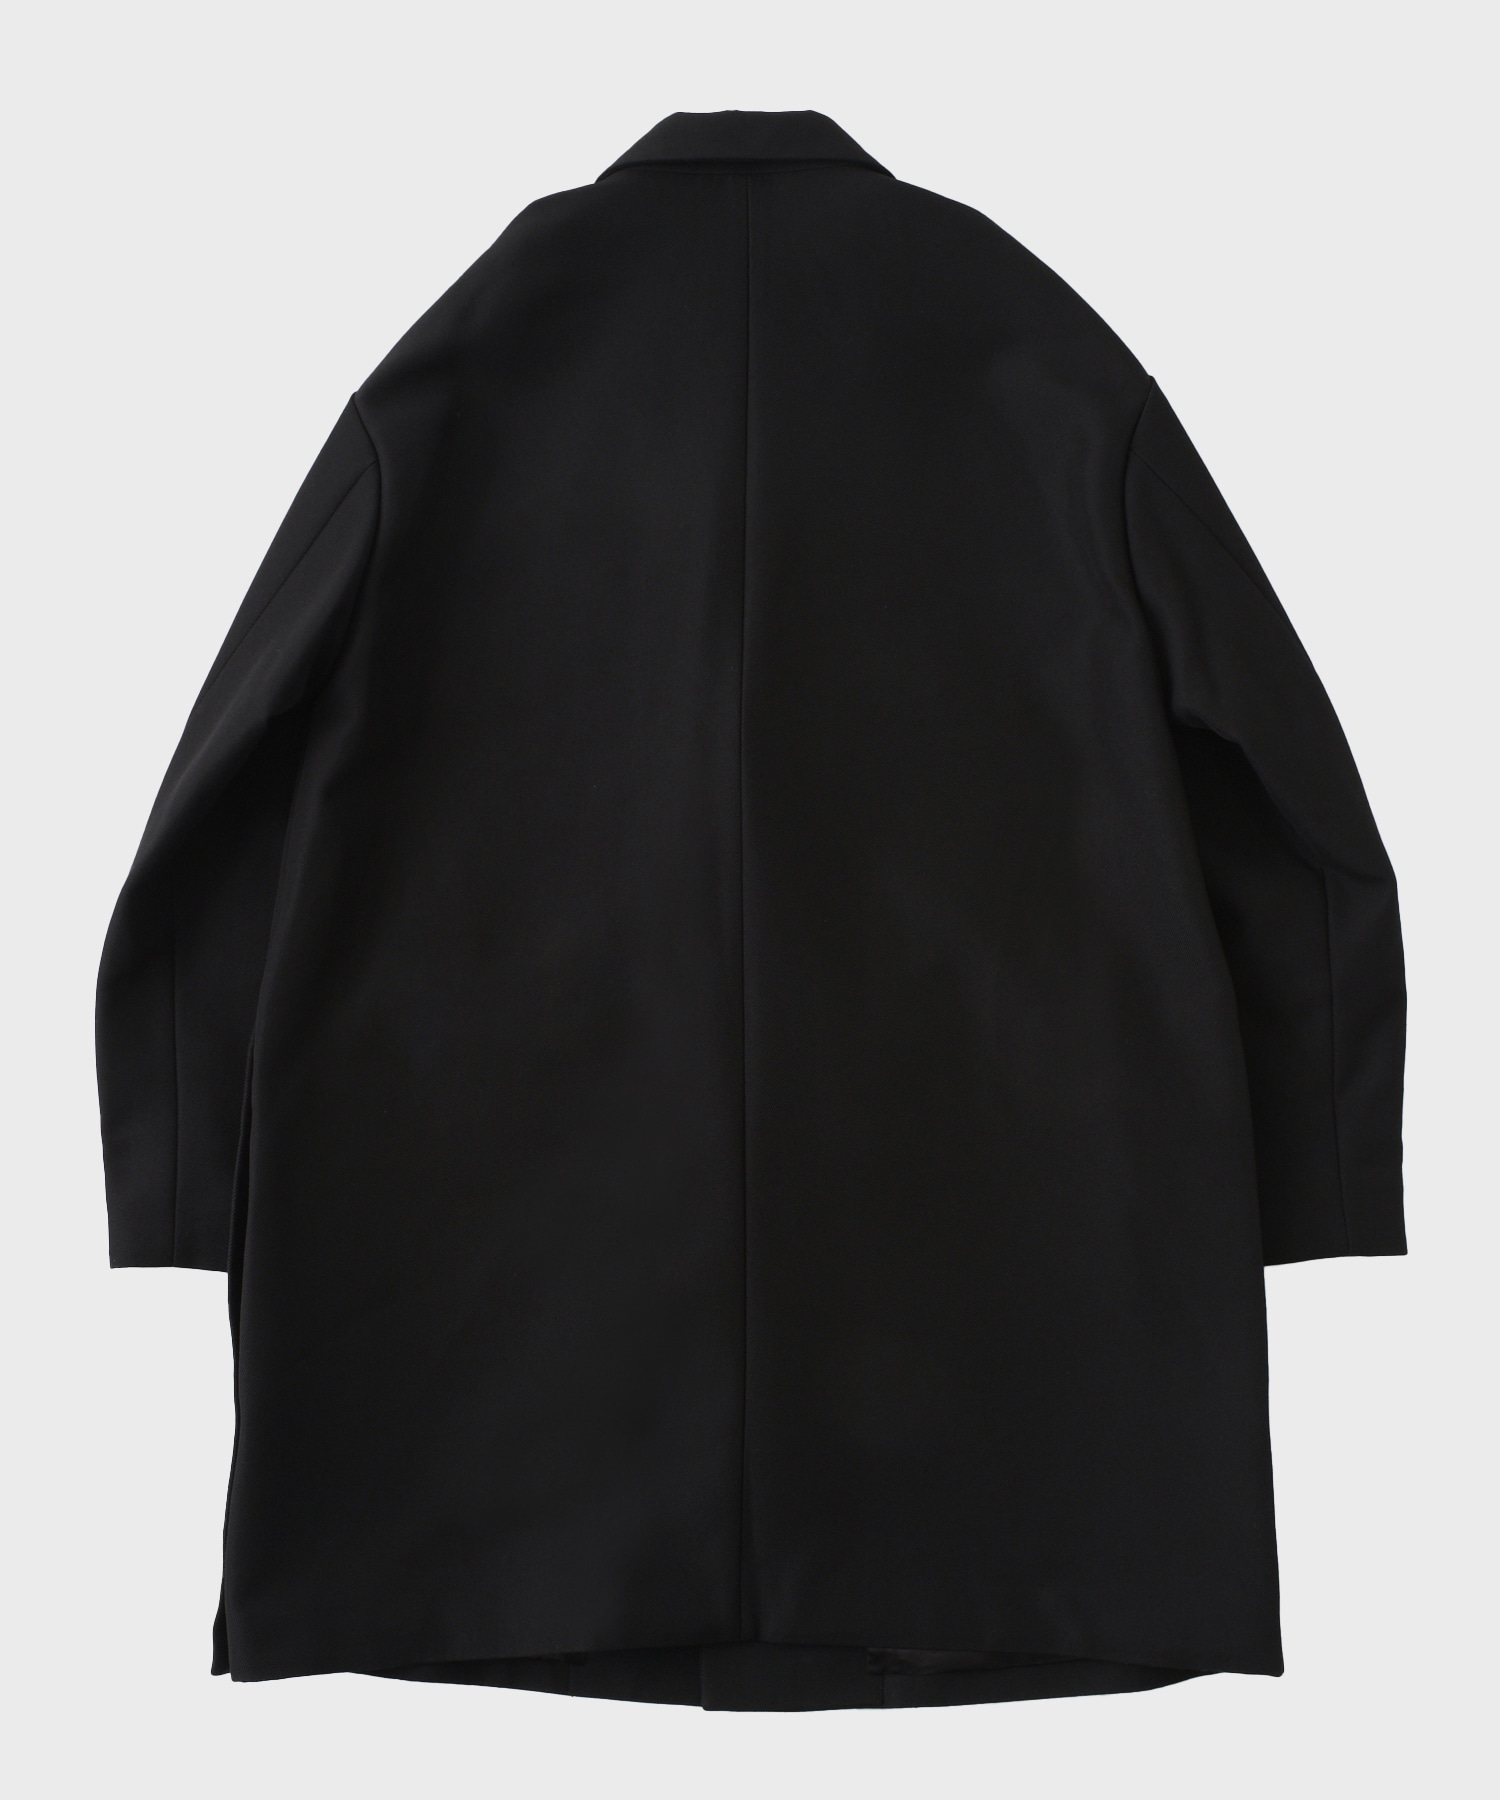 EVANGELION jacket coat